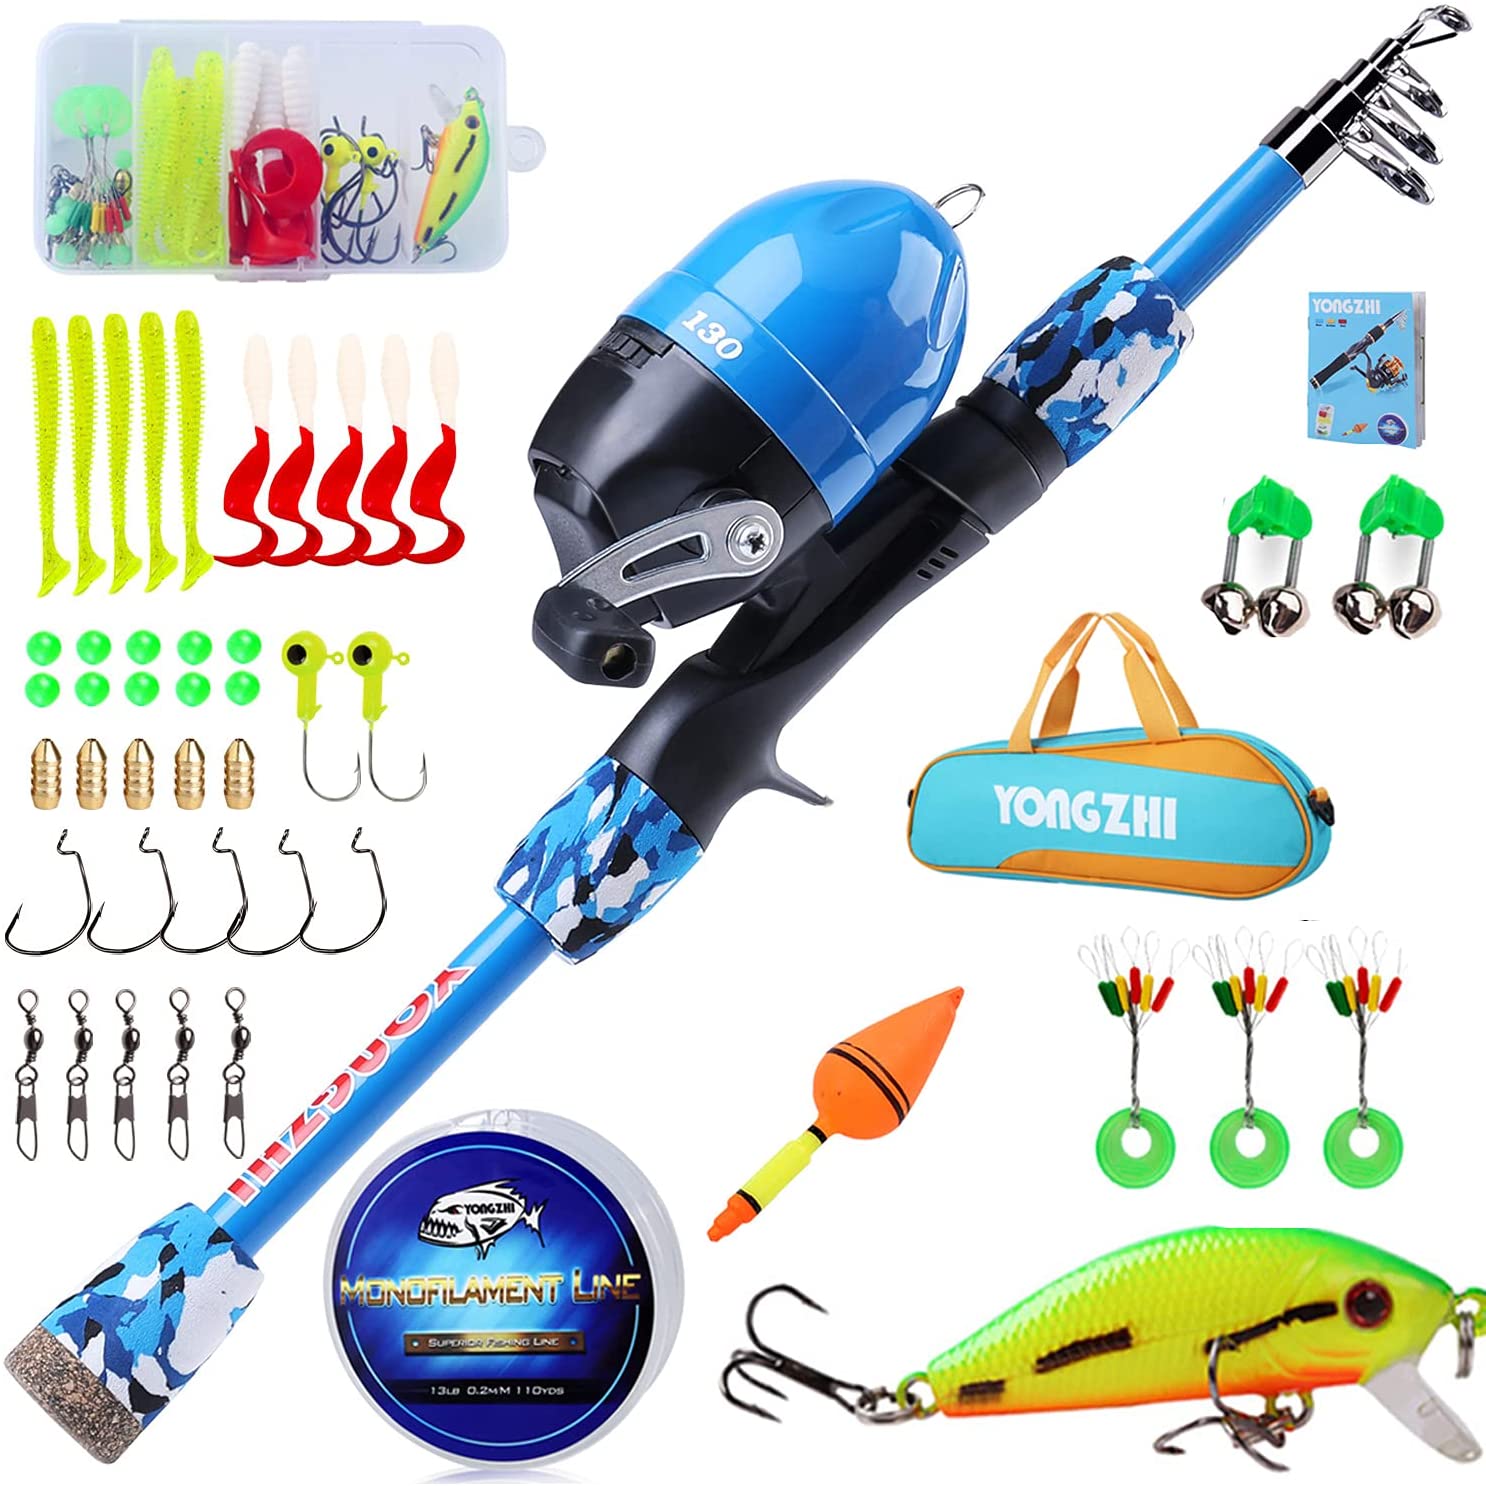 YONGZHI Kids Portable Telescopic Fishing Rod and Spincast Fishing